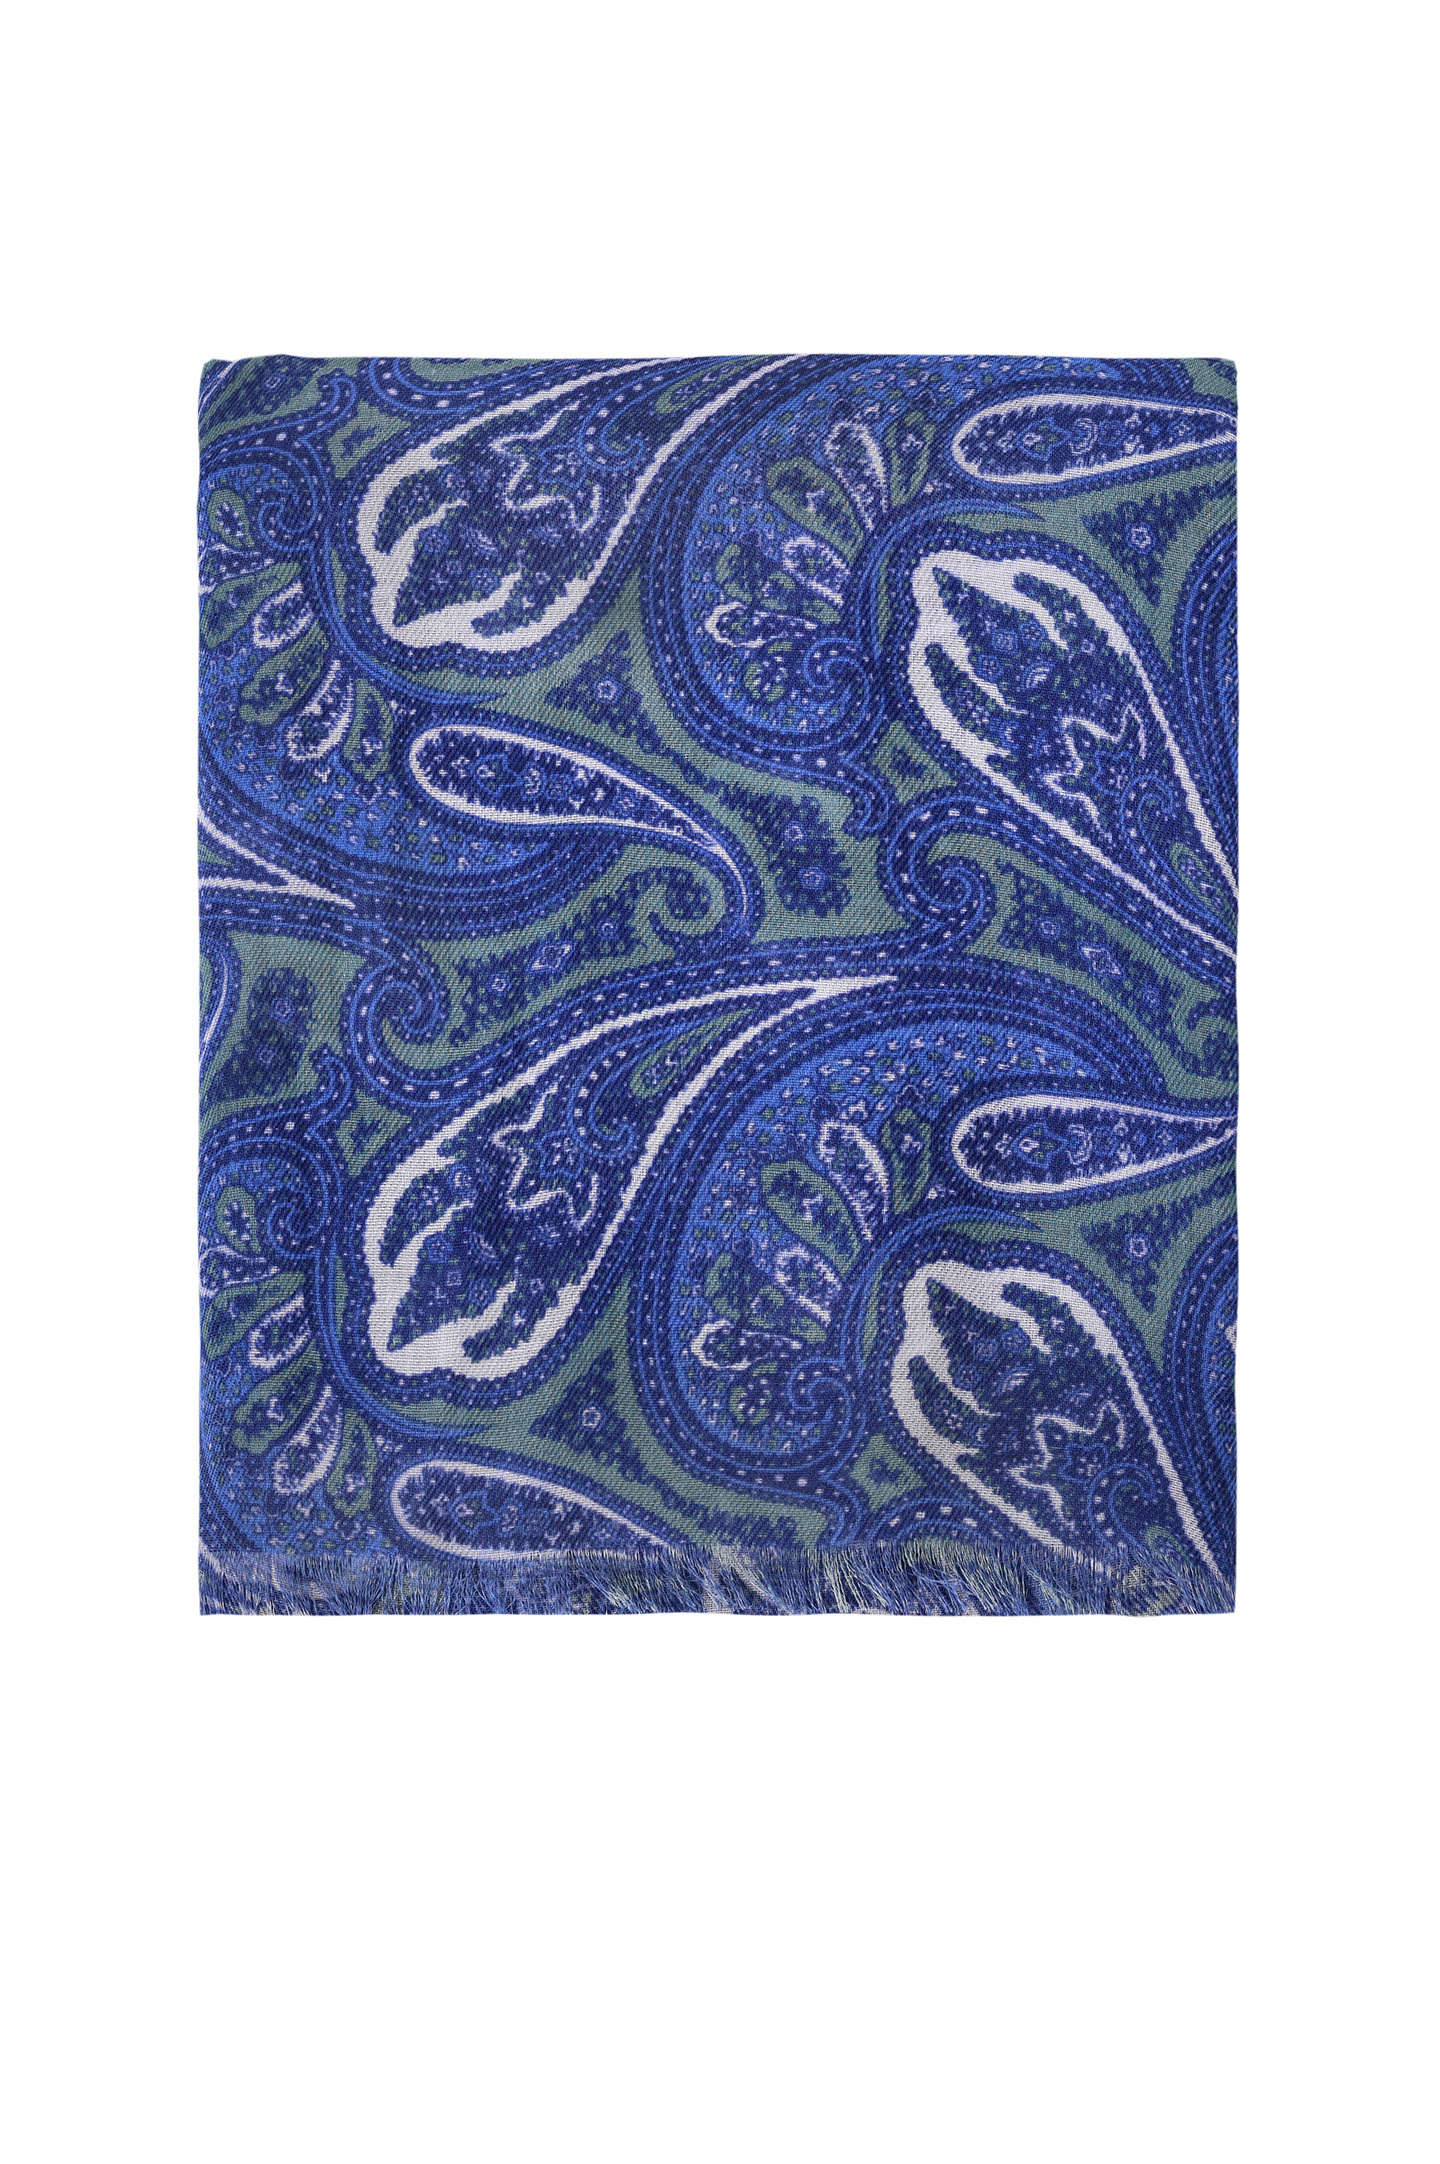 Шарф CESARE ATTOLINI SC120F02 1220, цвет: Синий, Мужской